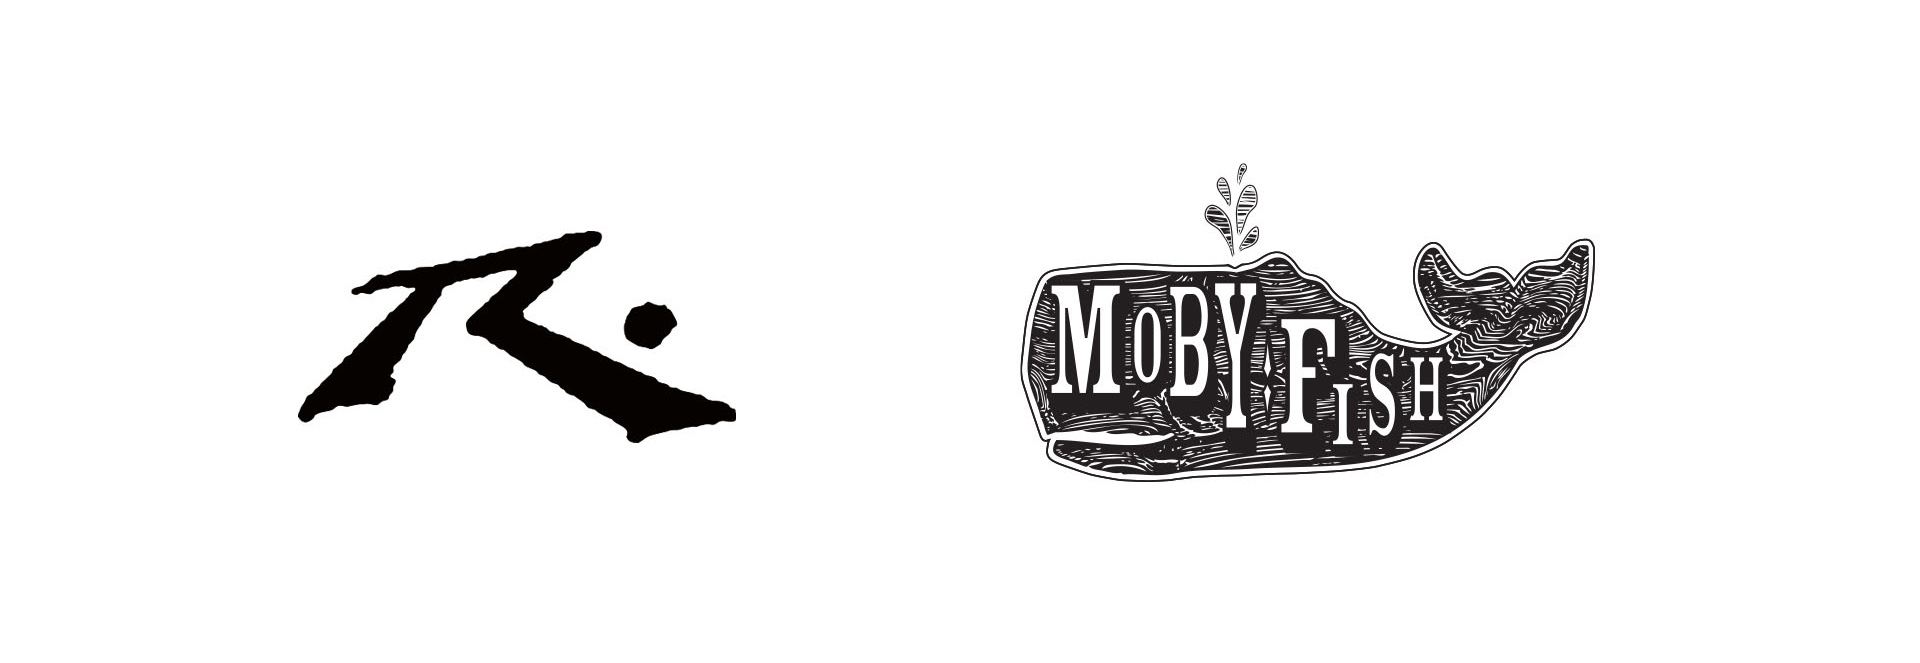 moby fish_1.jpg